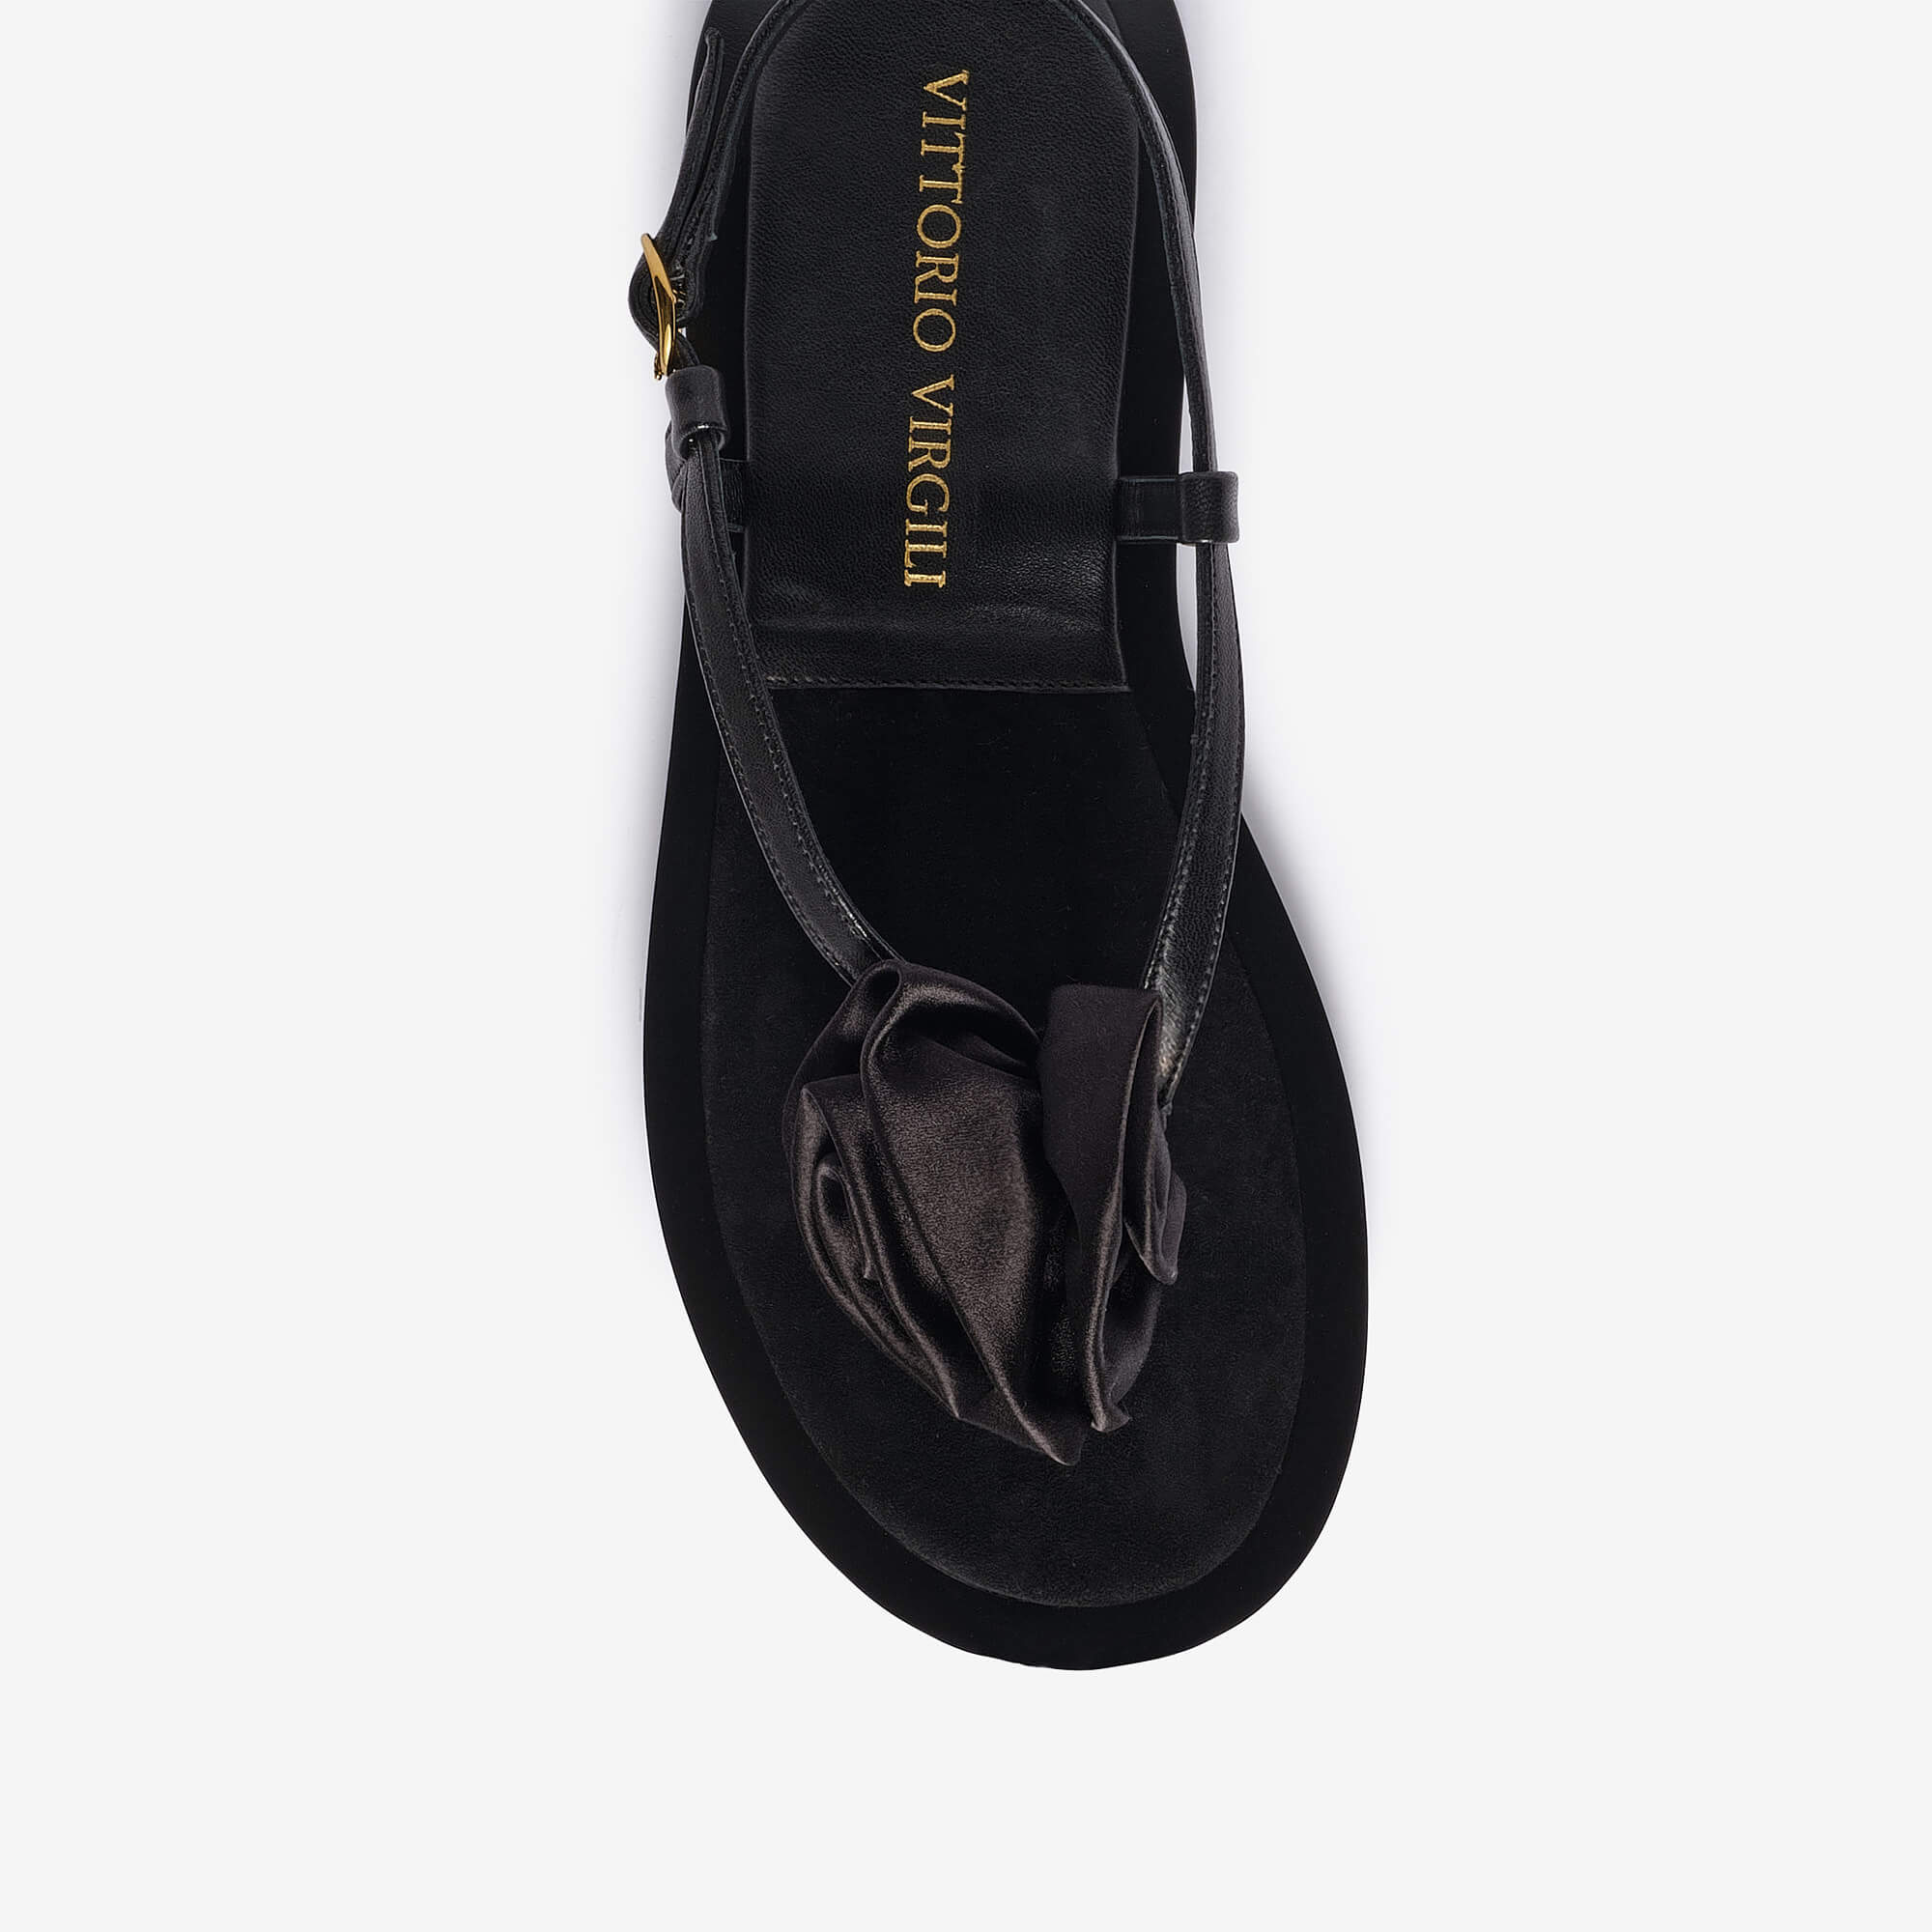 Ulpia | Women's leather sandal